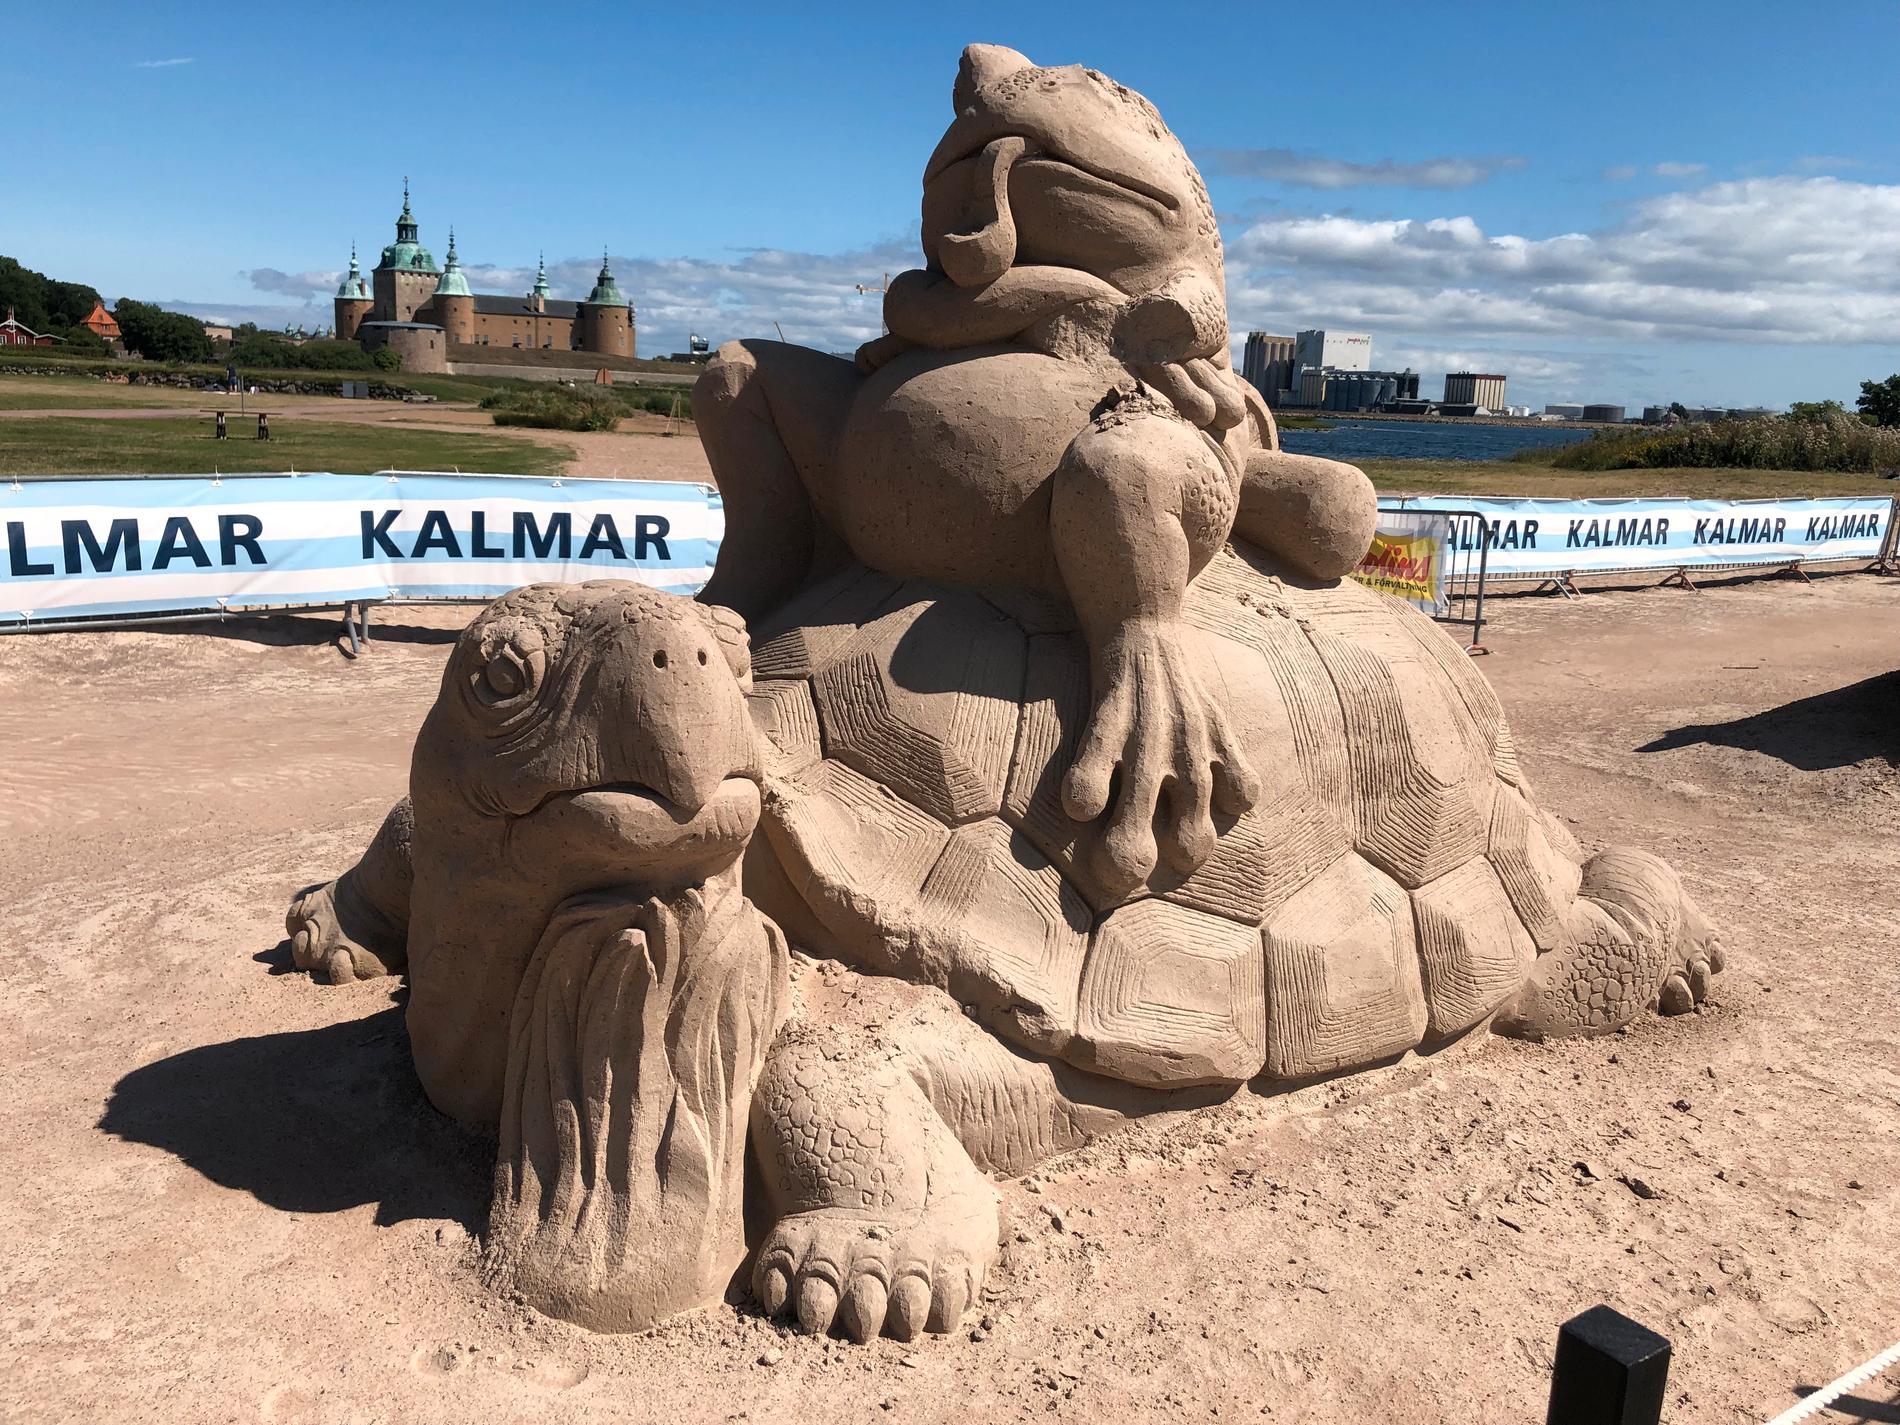 Tjusiga sandskulpturer i Kalmarsundsparken i Kalmar.